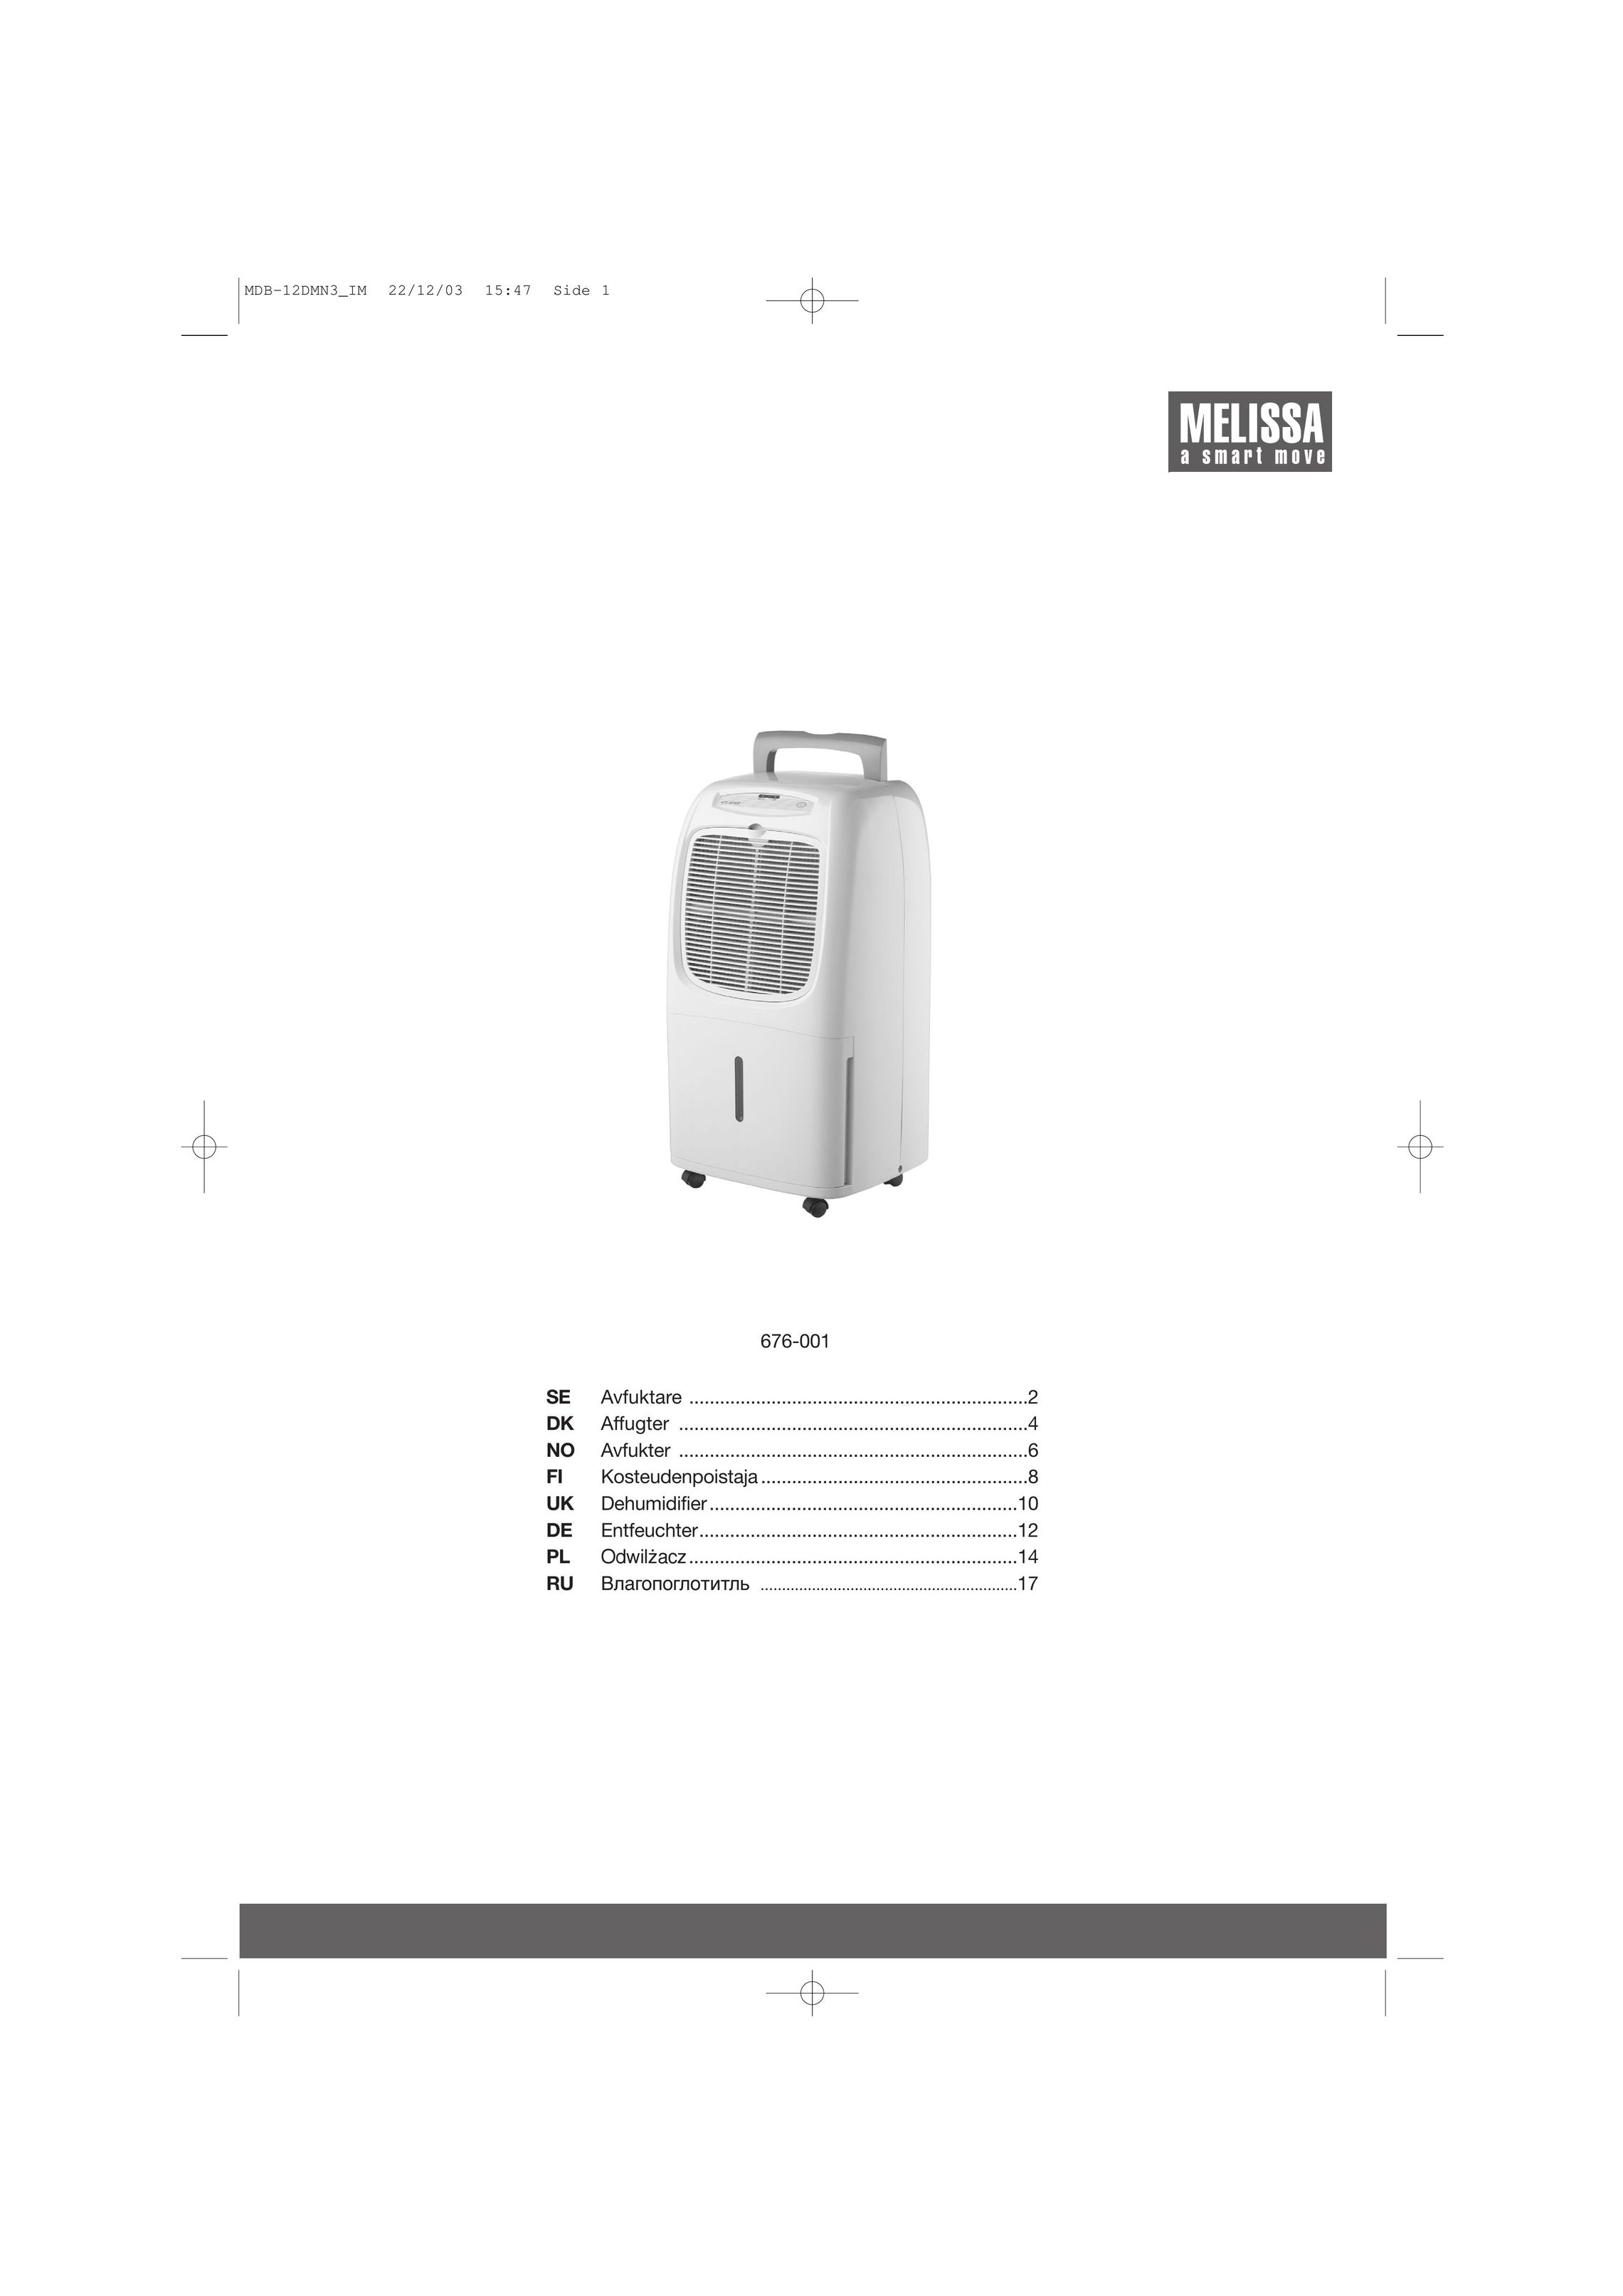 Melissa 676-001 Dehumidifier User Manual